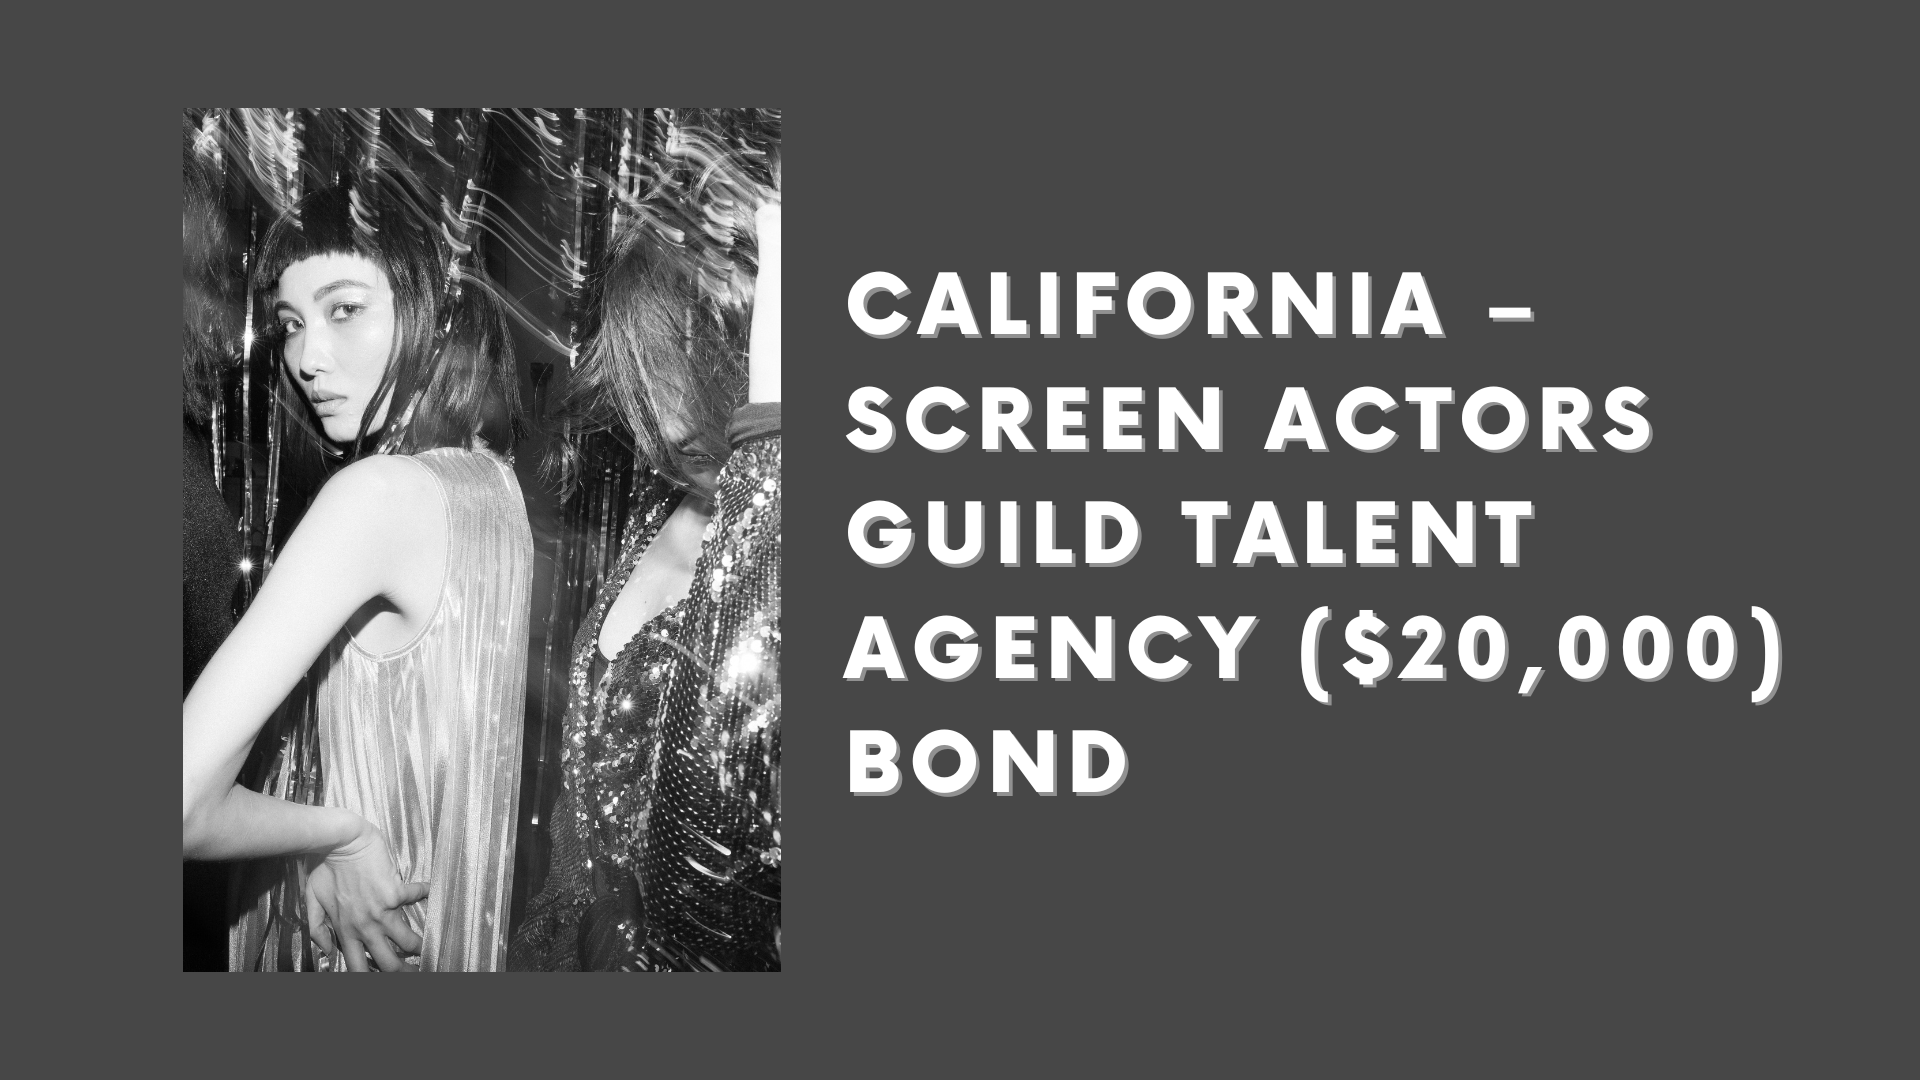 Surety Bond-California – Screen Actors Guild Talent Agency ($20,000) Bond